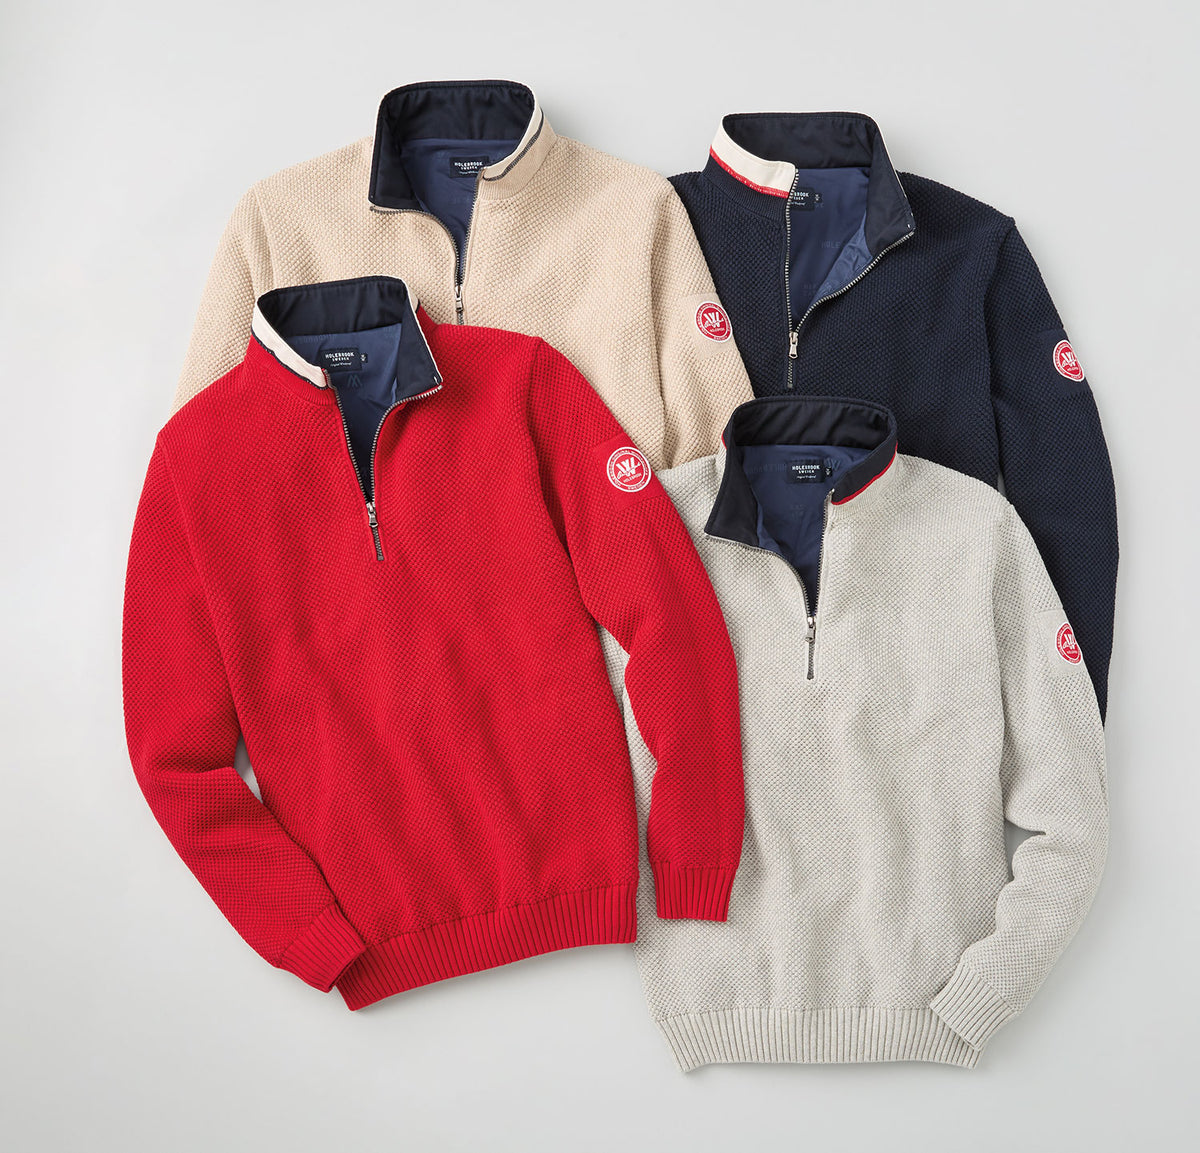 Classic Windproof Cotton Quarter-Zip Sweater